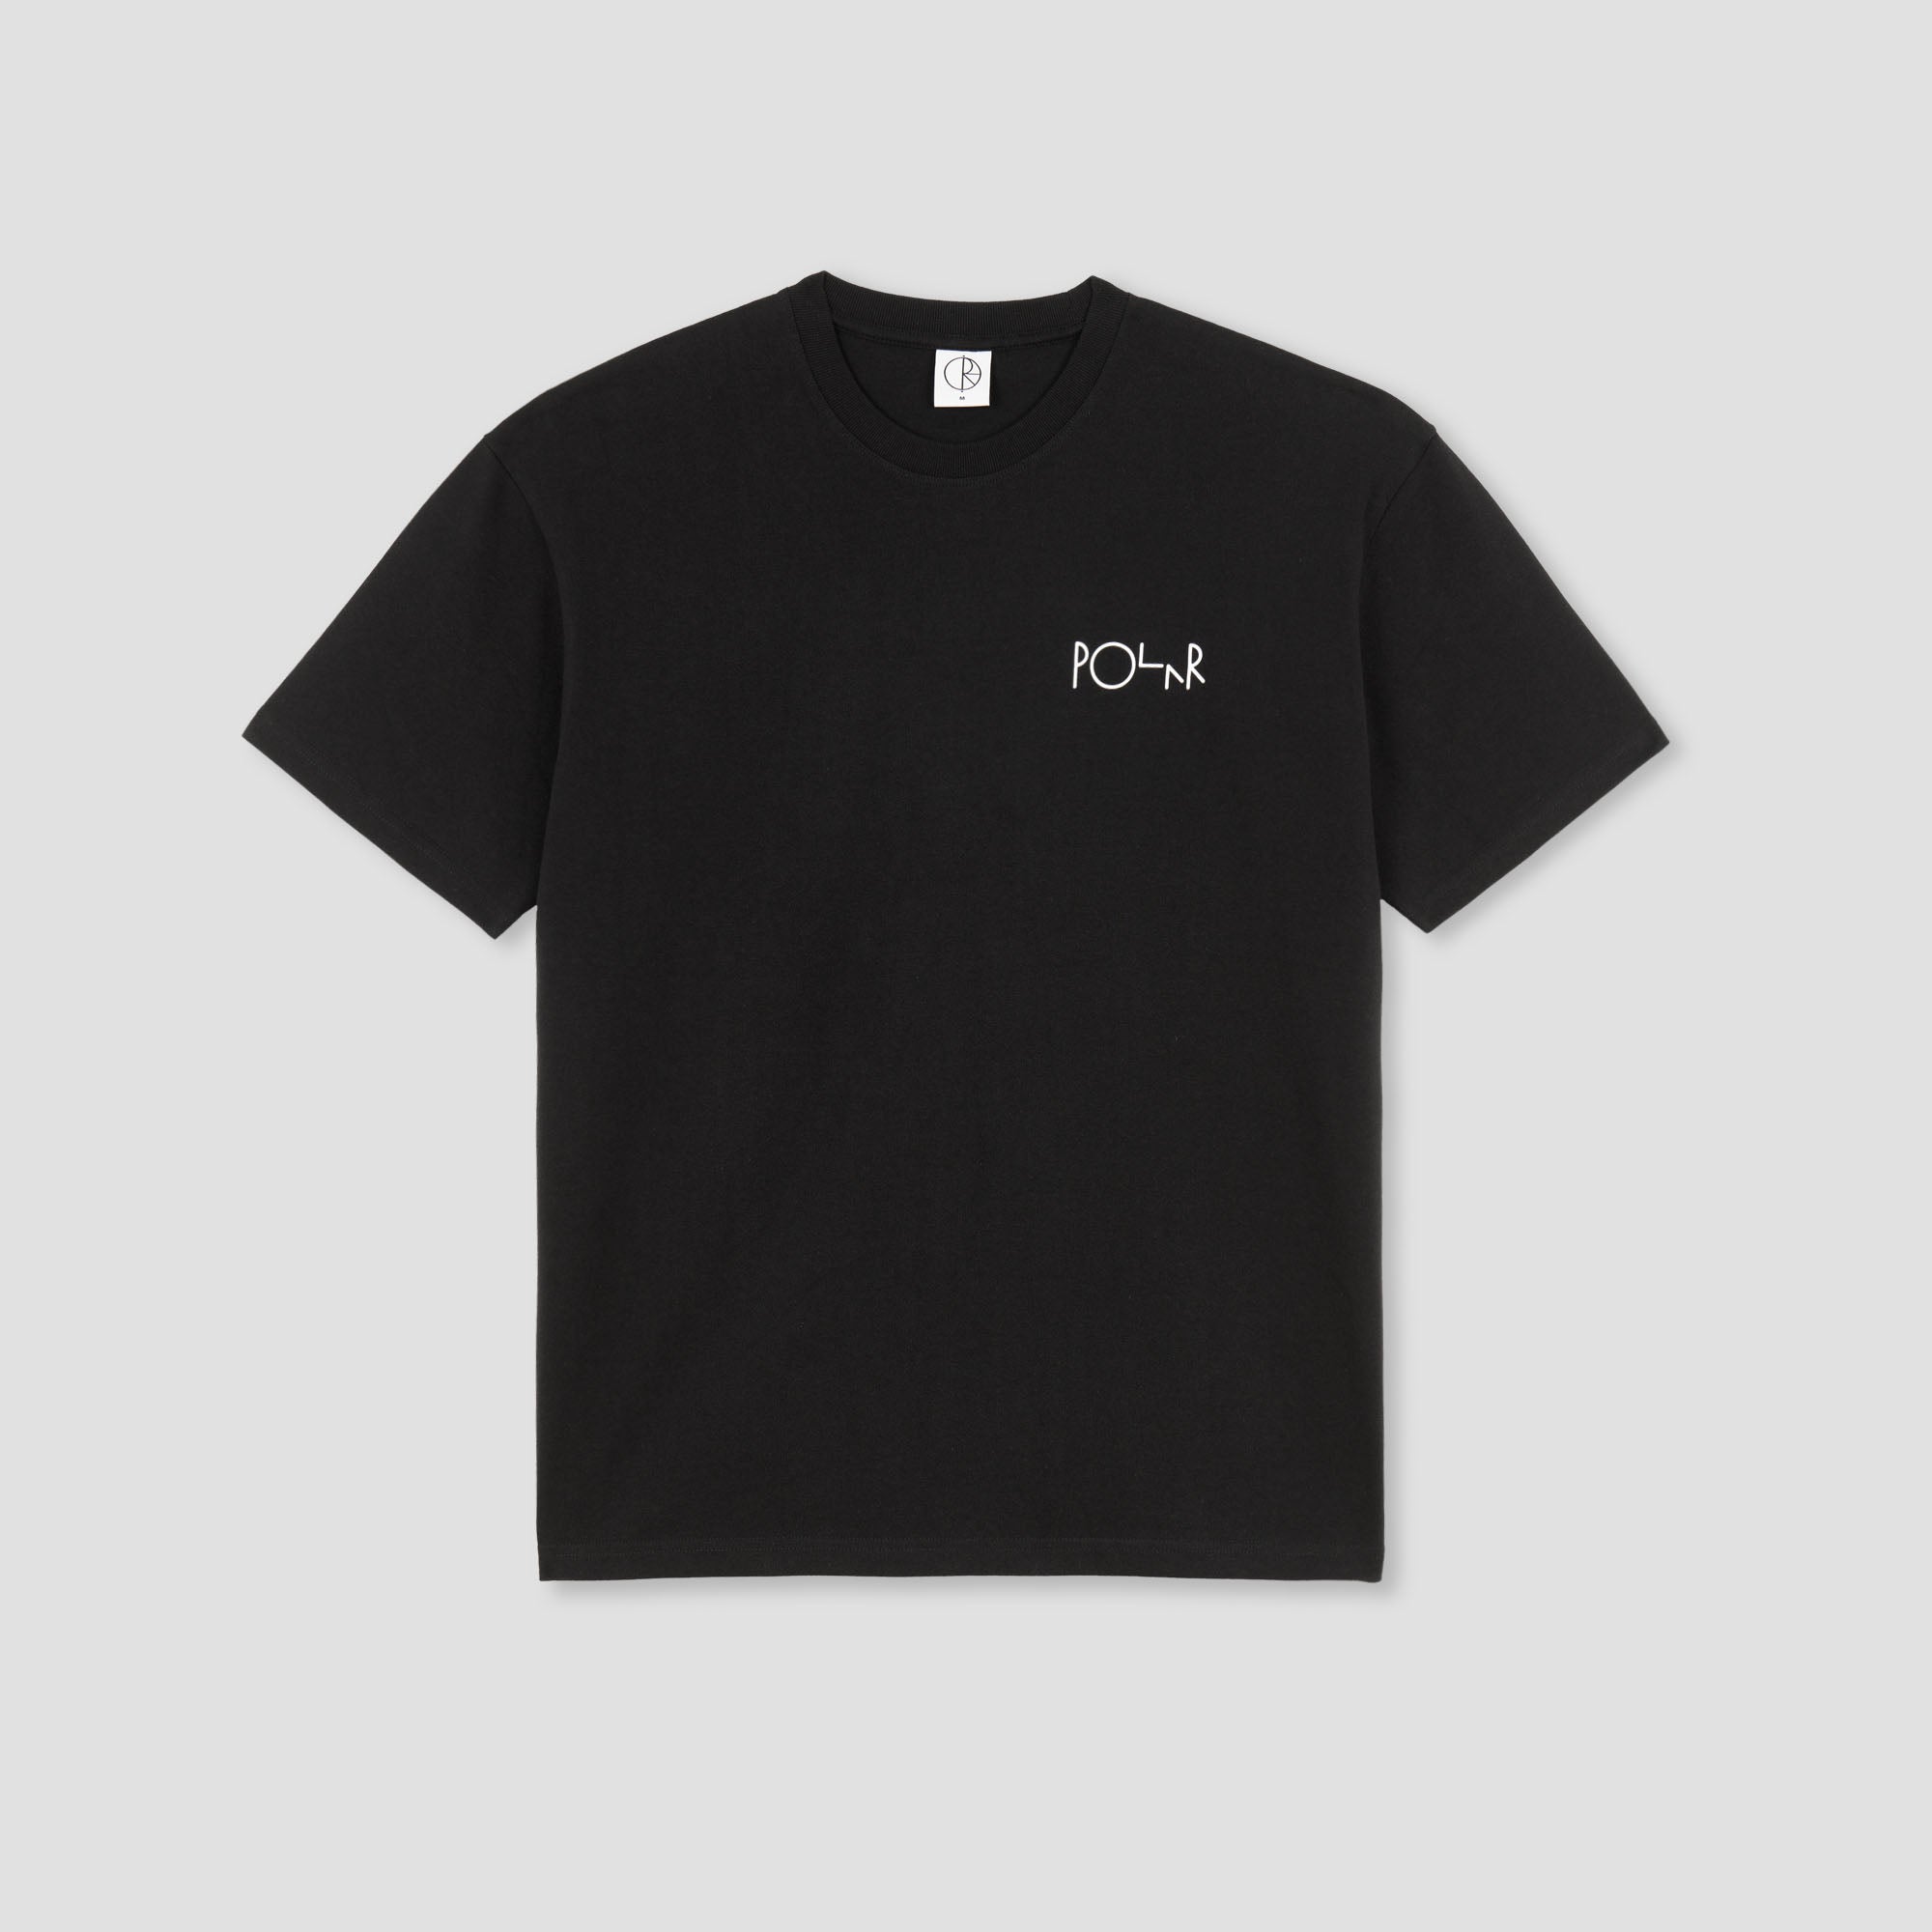 Polar Stroke Logo T-Shirt Black